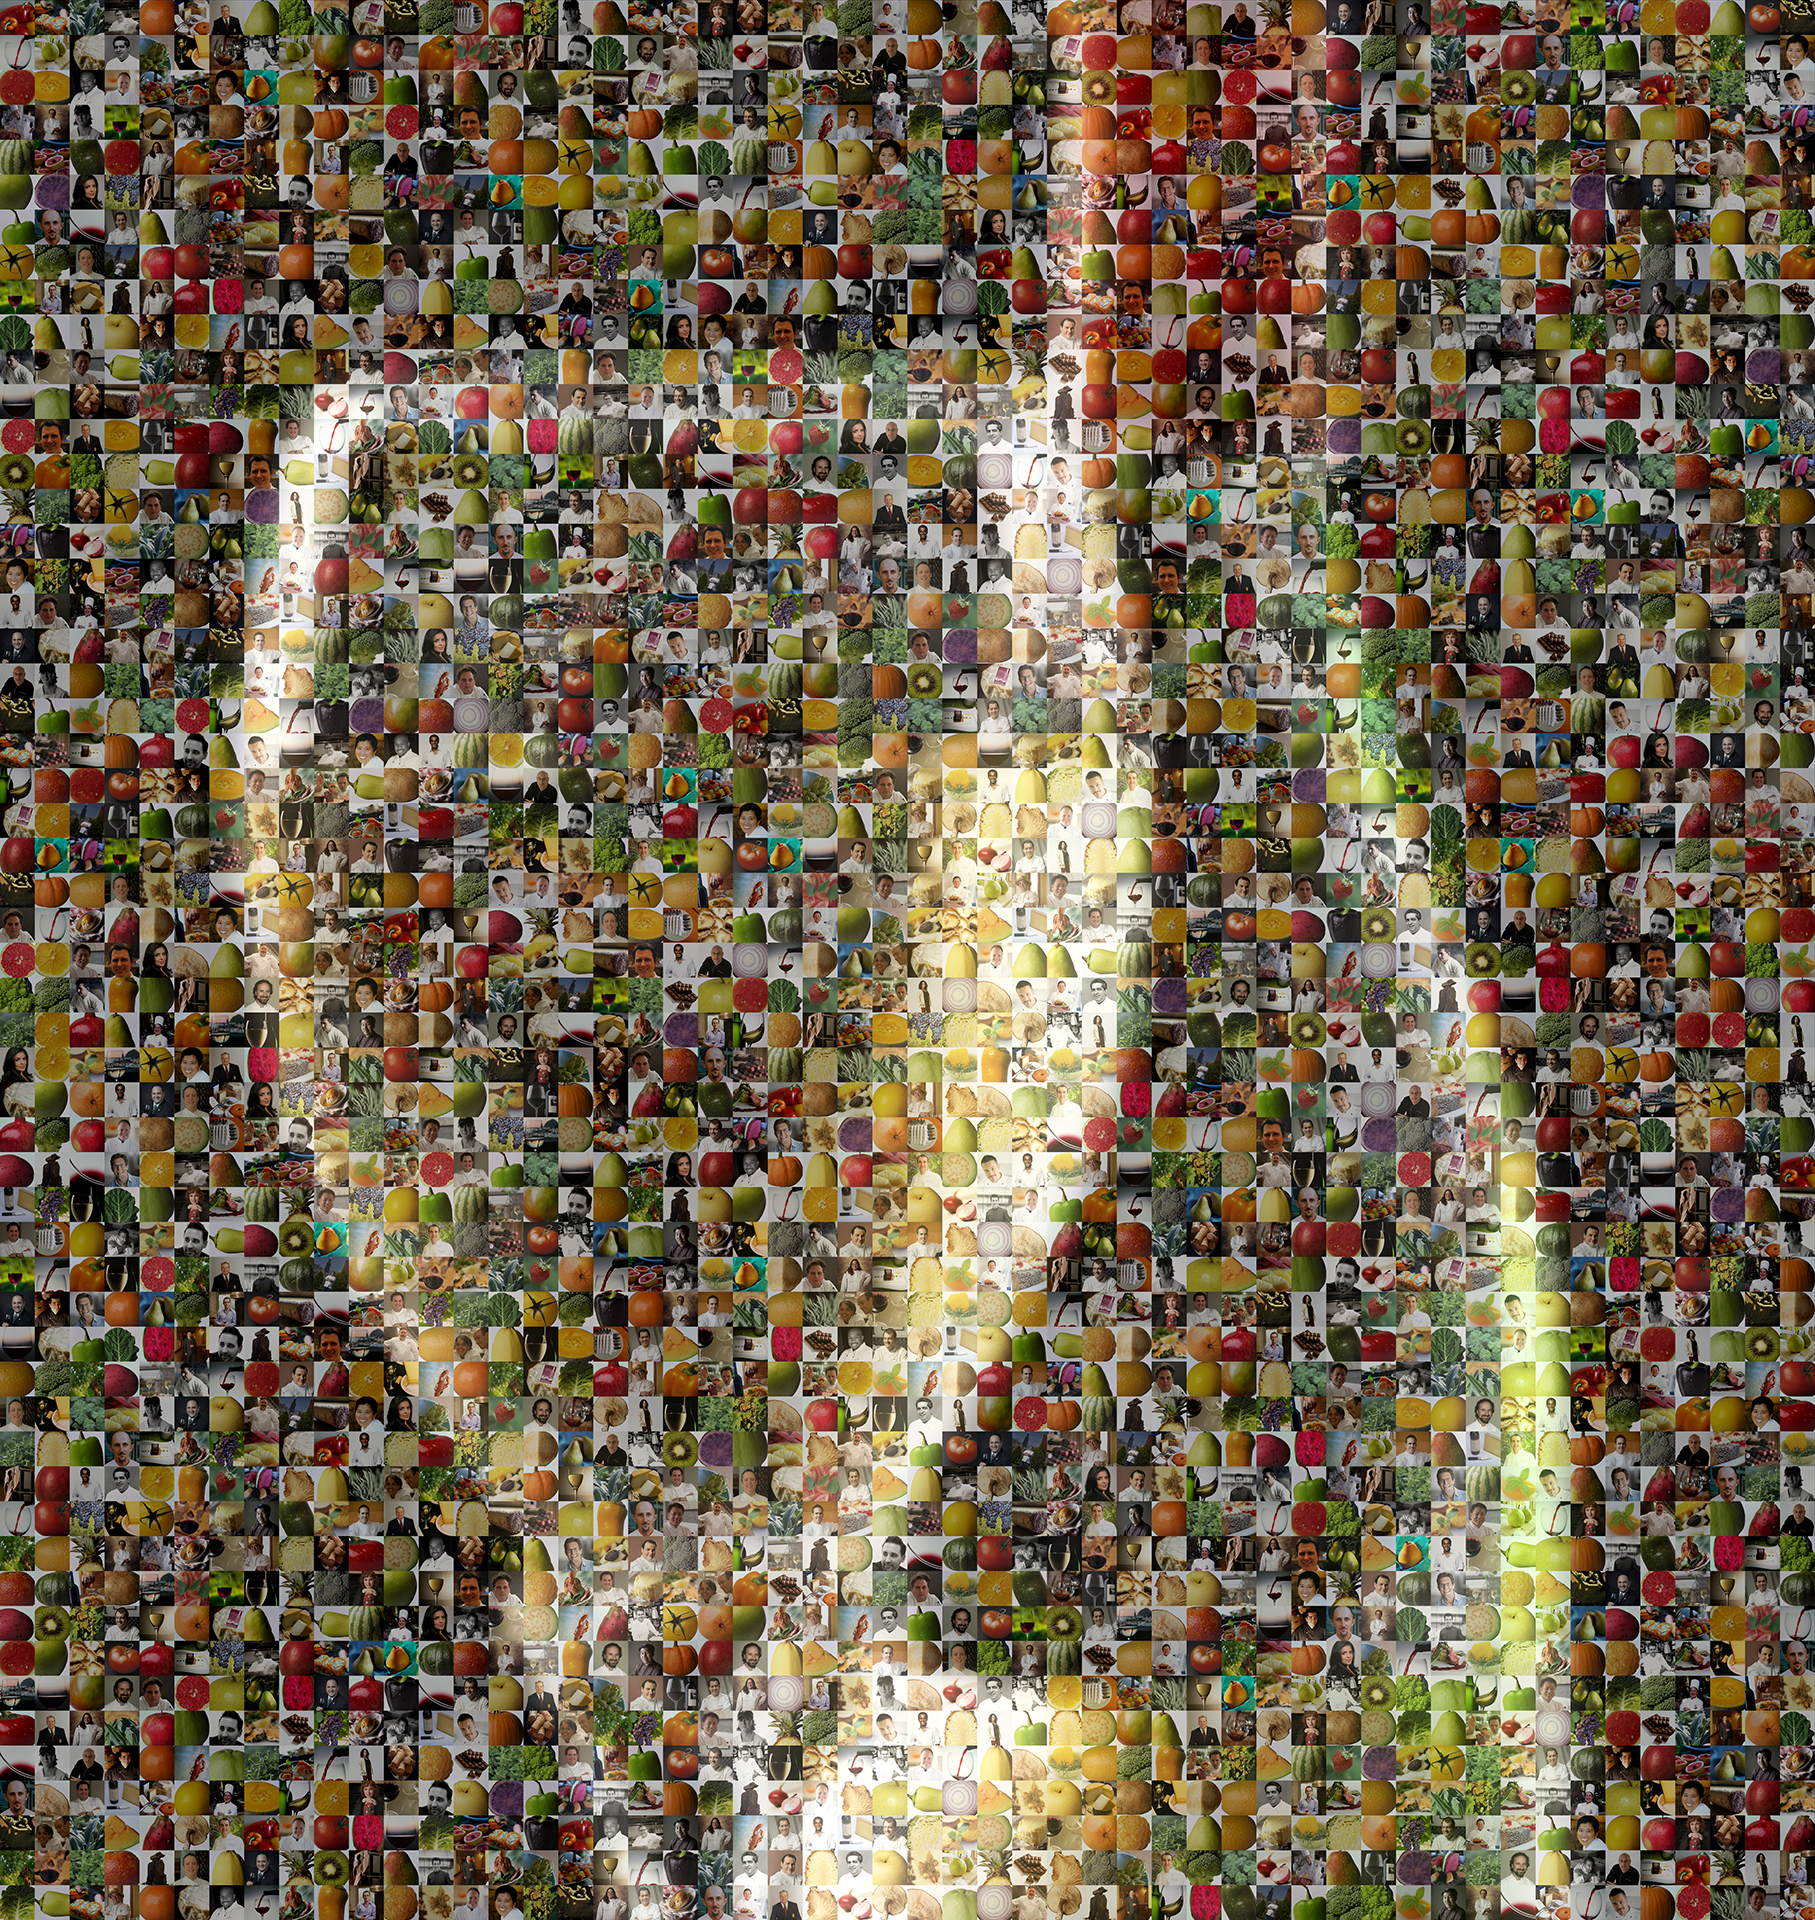 photo mosaic created using 144 product photos